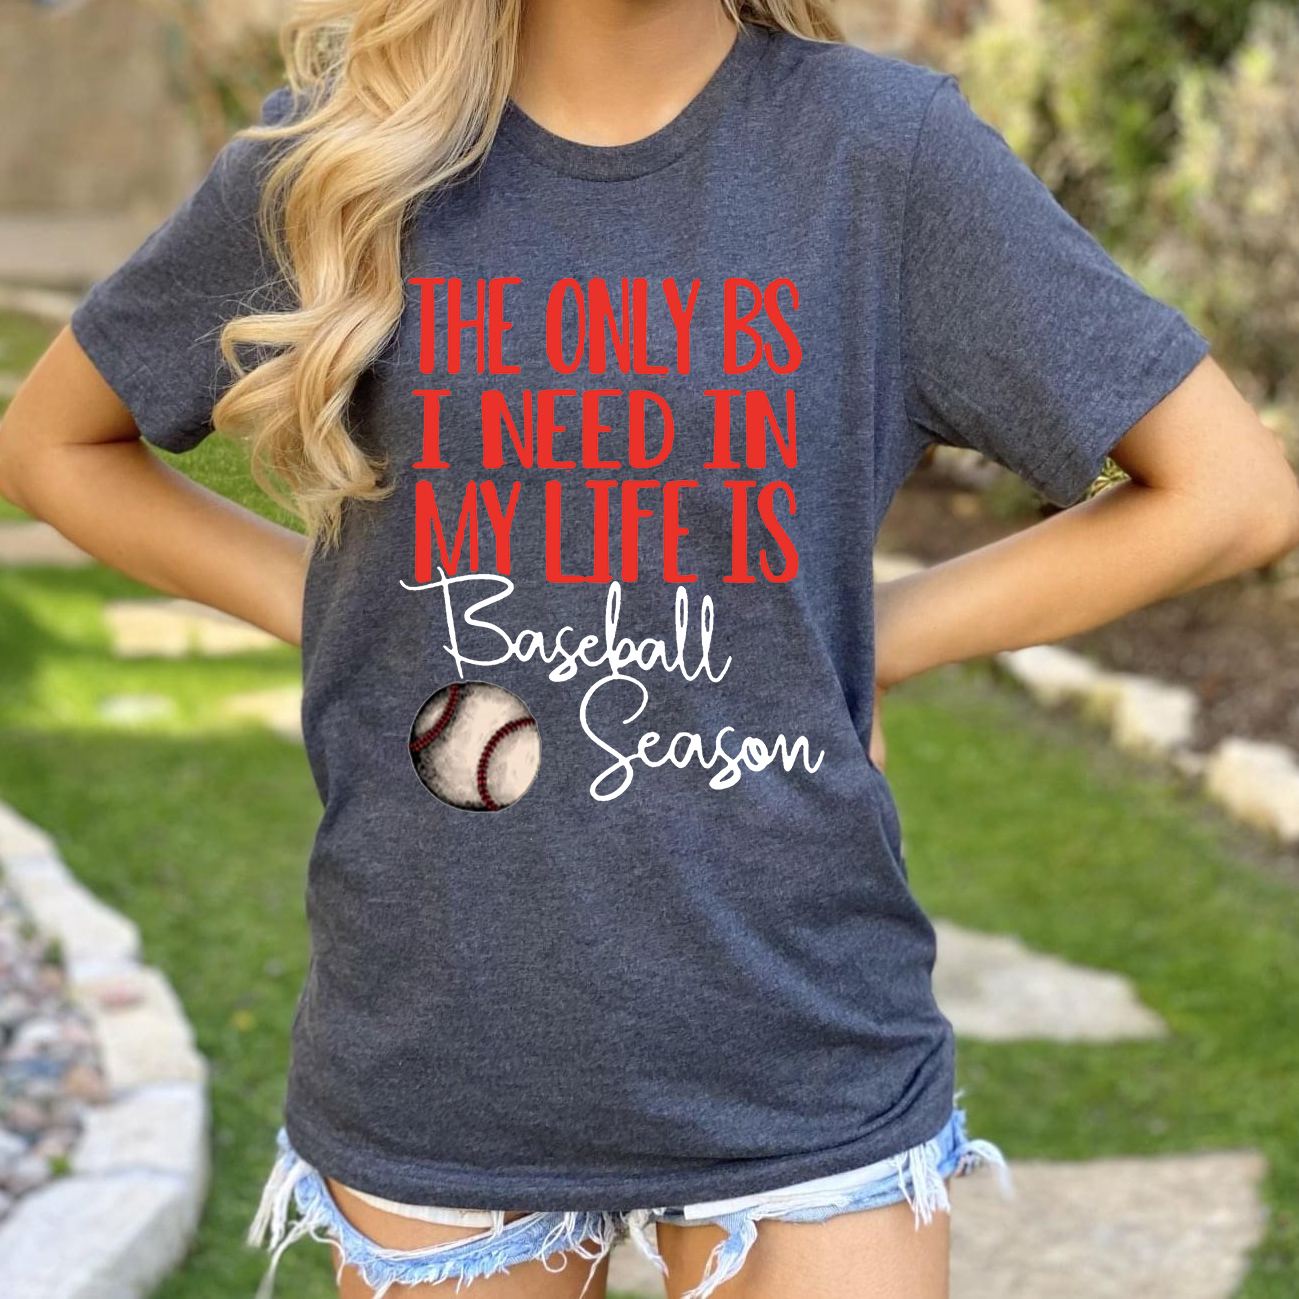 the only bs i need in my life is baseball season unisex T-Shirt Long Sleeve T-Shirt  Hoodie Sweatshirt